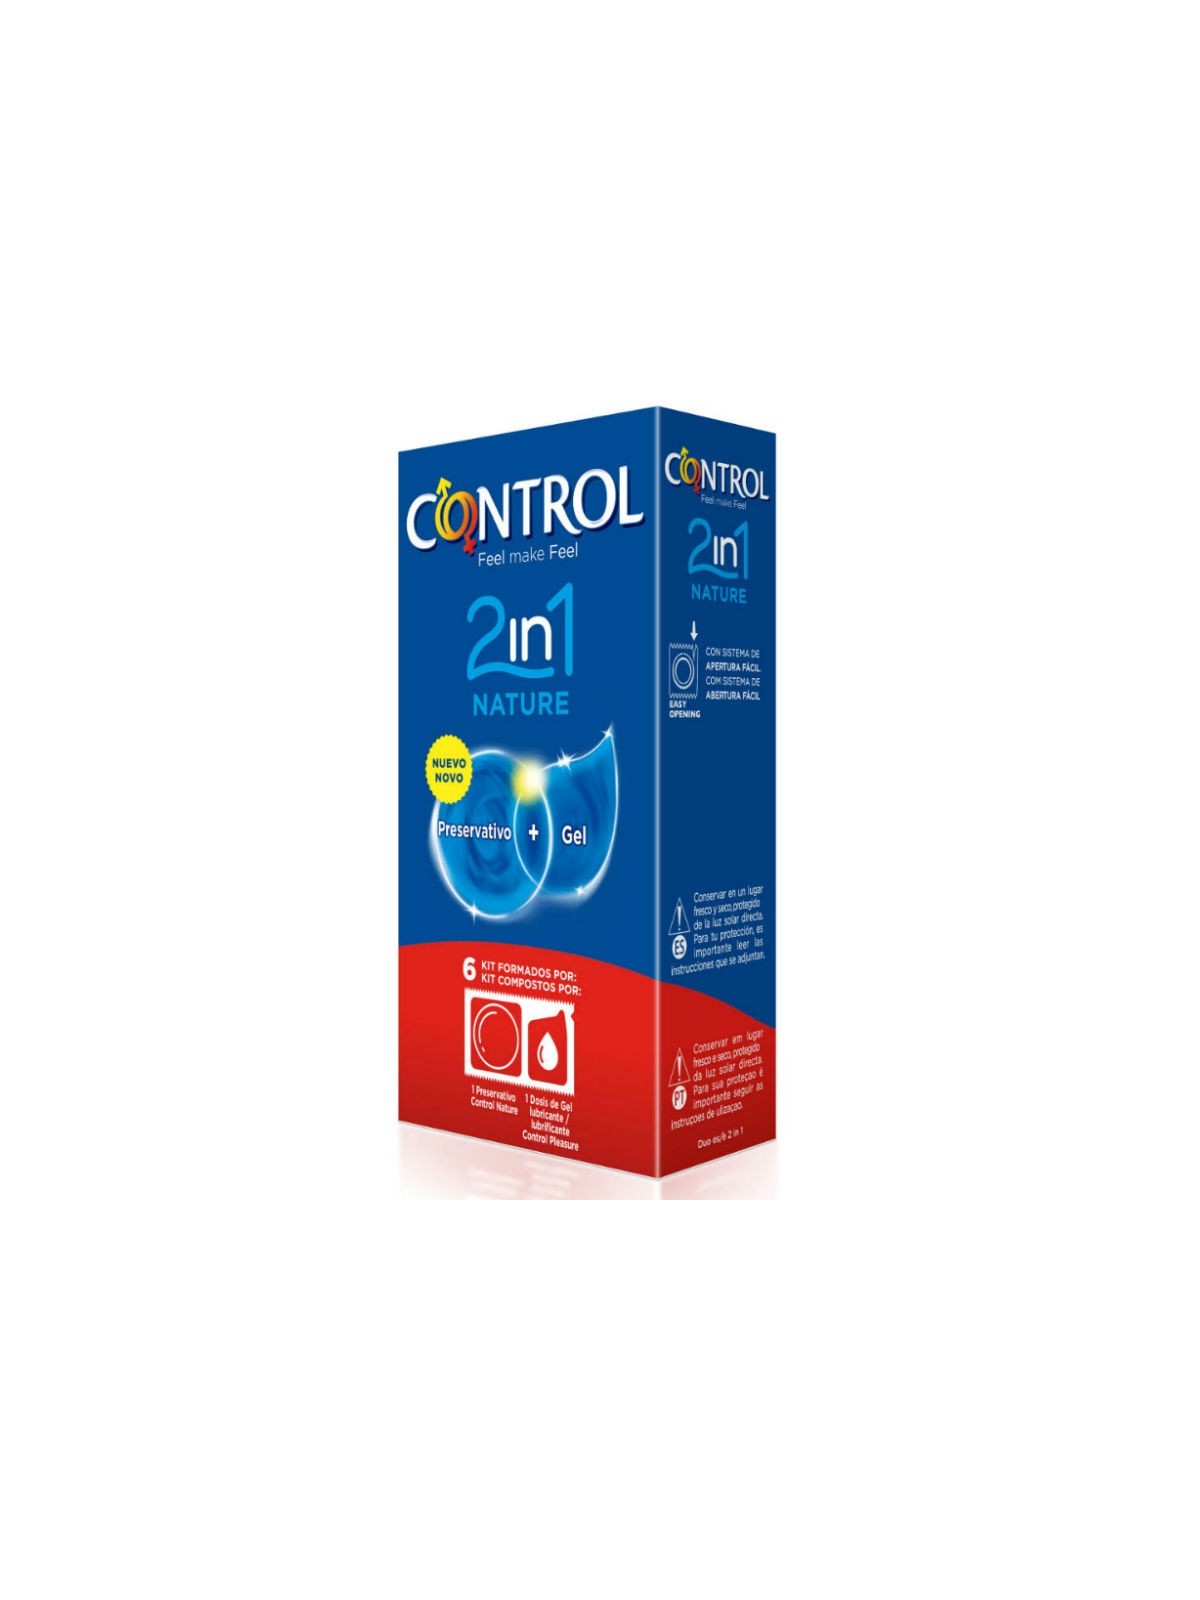 Control Duo Natura 2-1 Preservativo & Gel 6 uds - Comprar Condones naturales Control - Preservativos naturales (1)